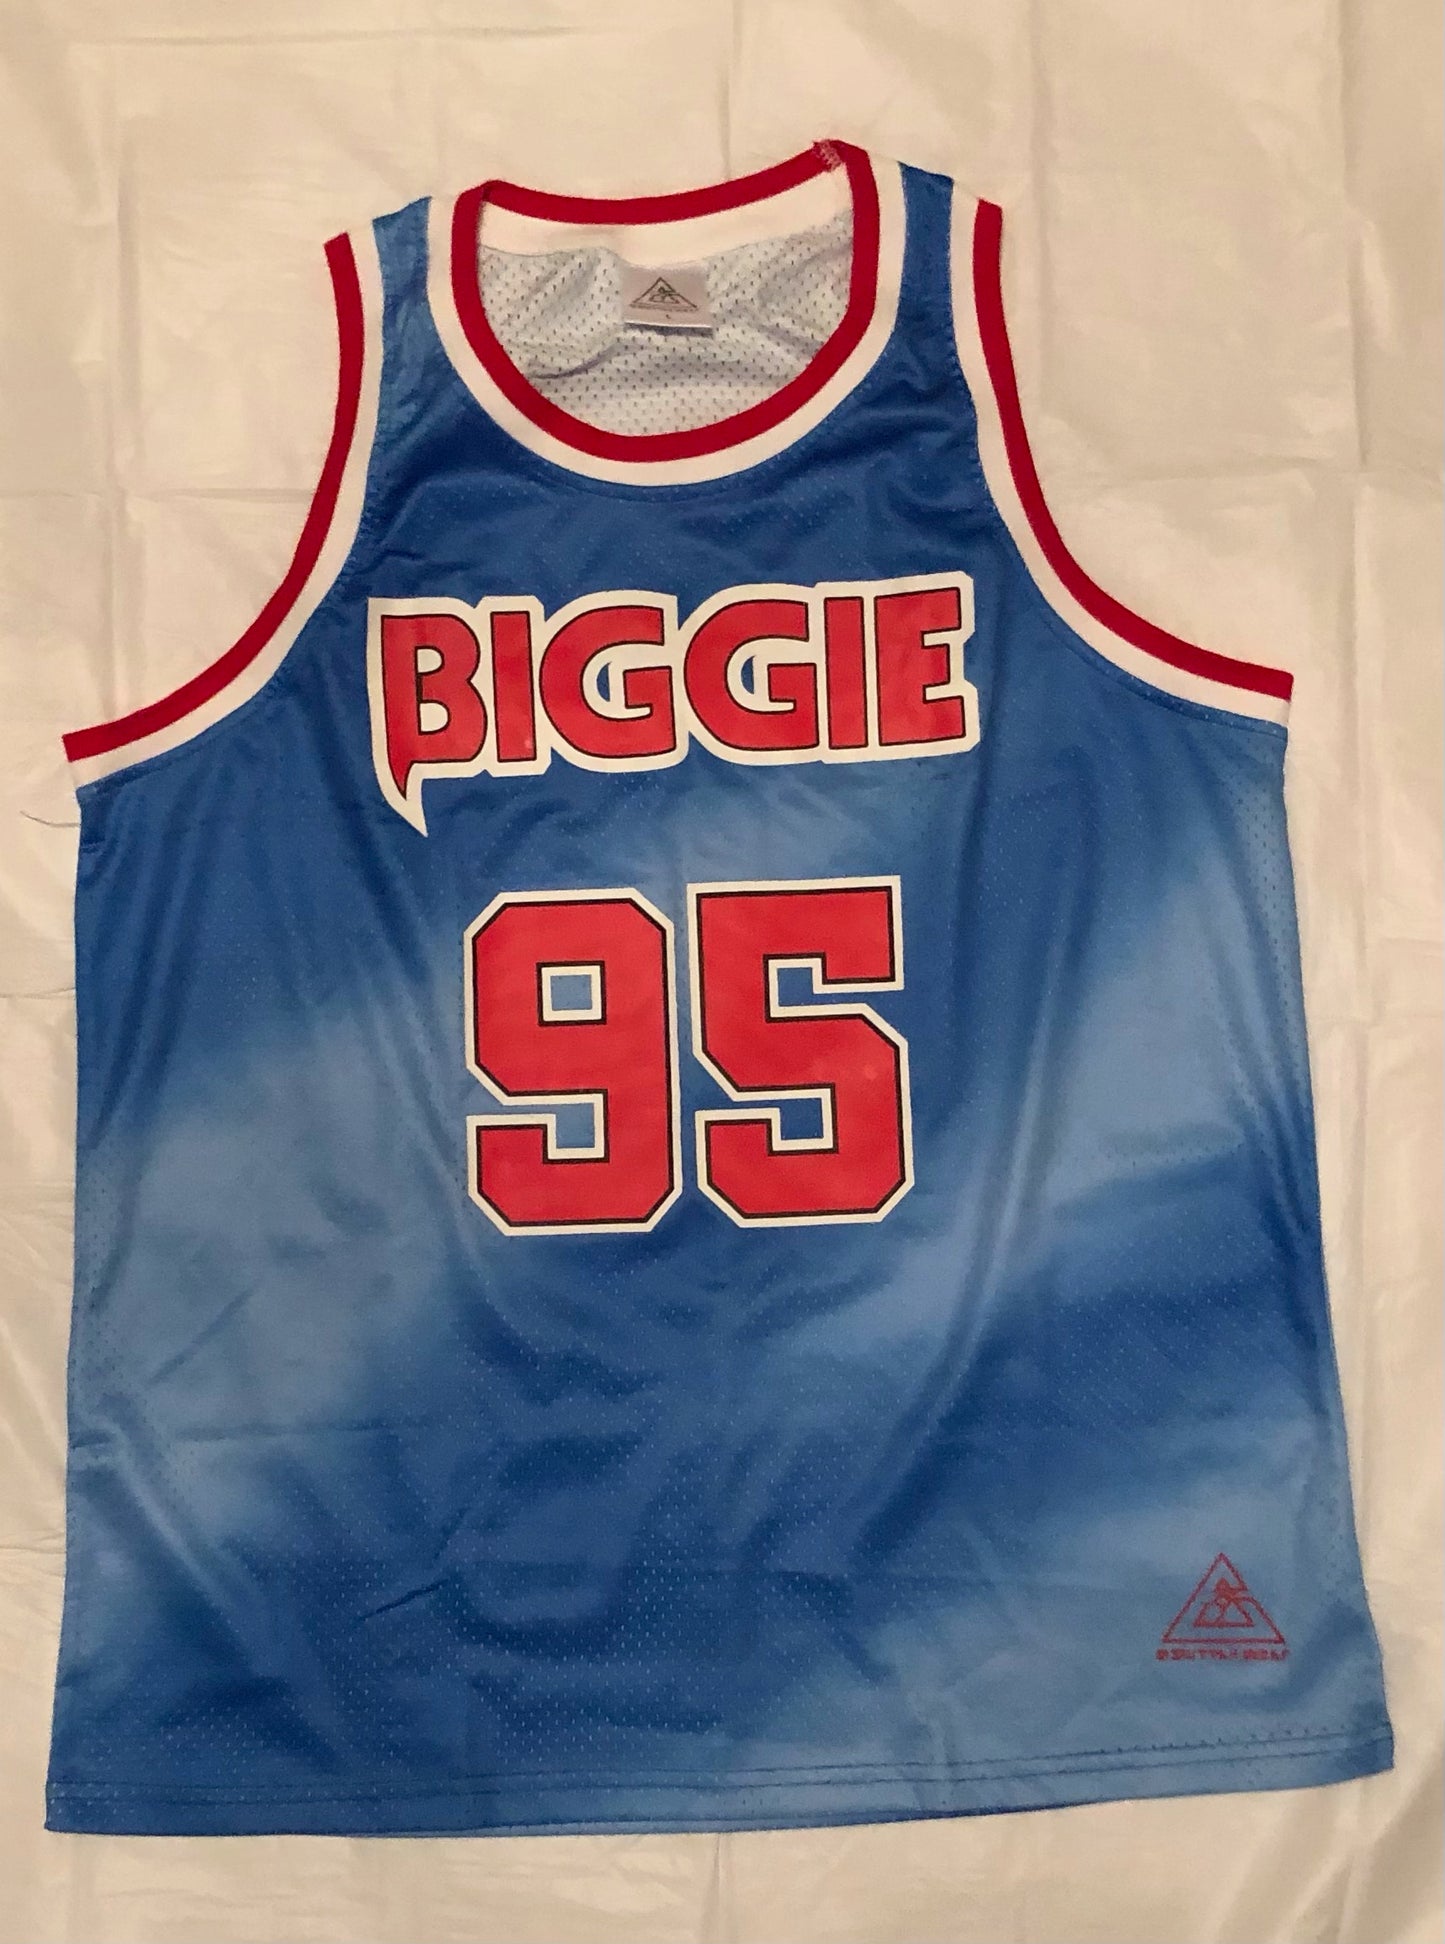 Biggie Jersey